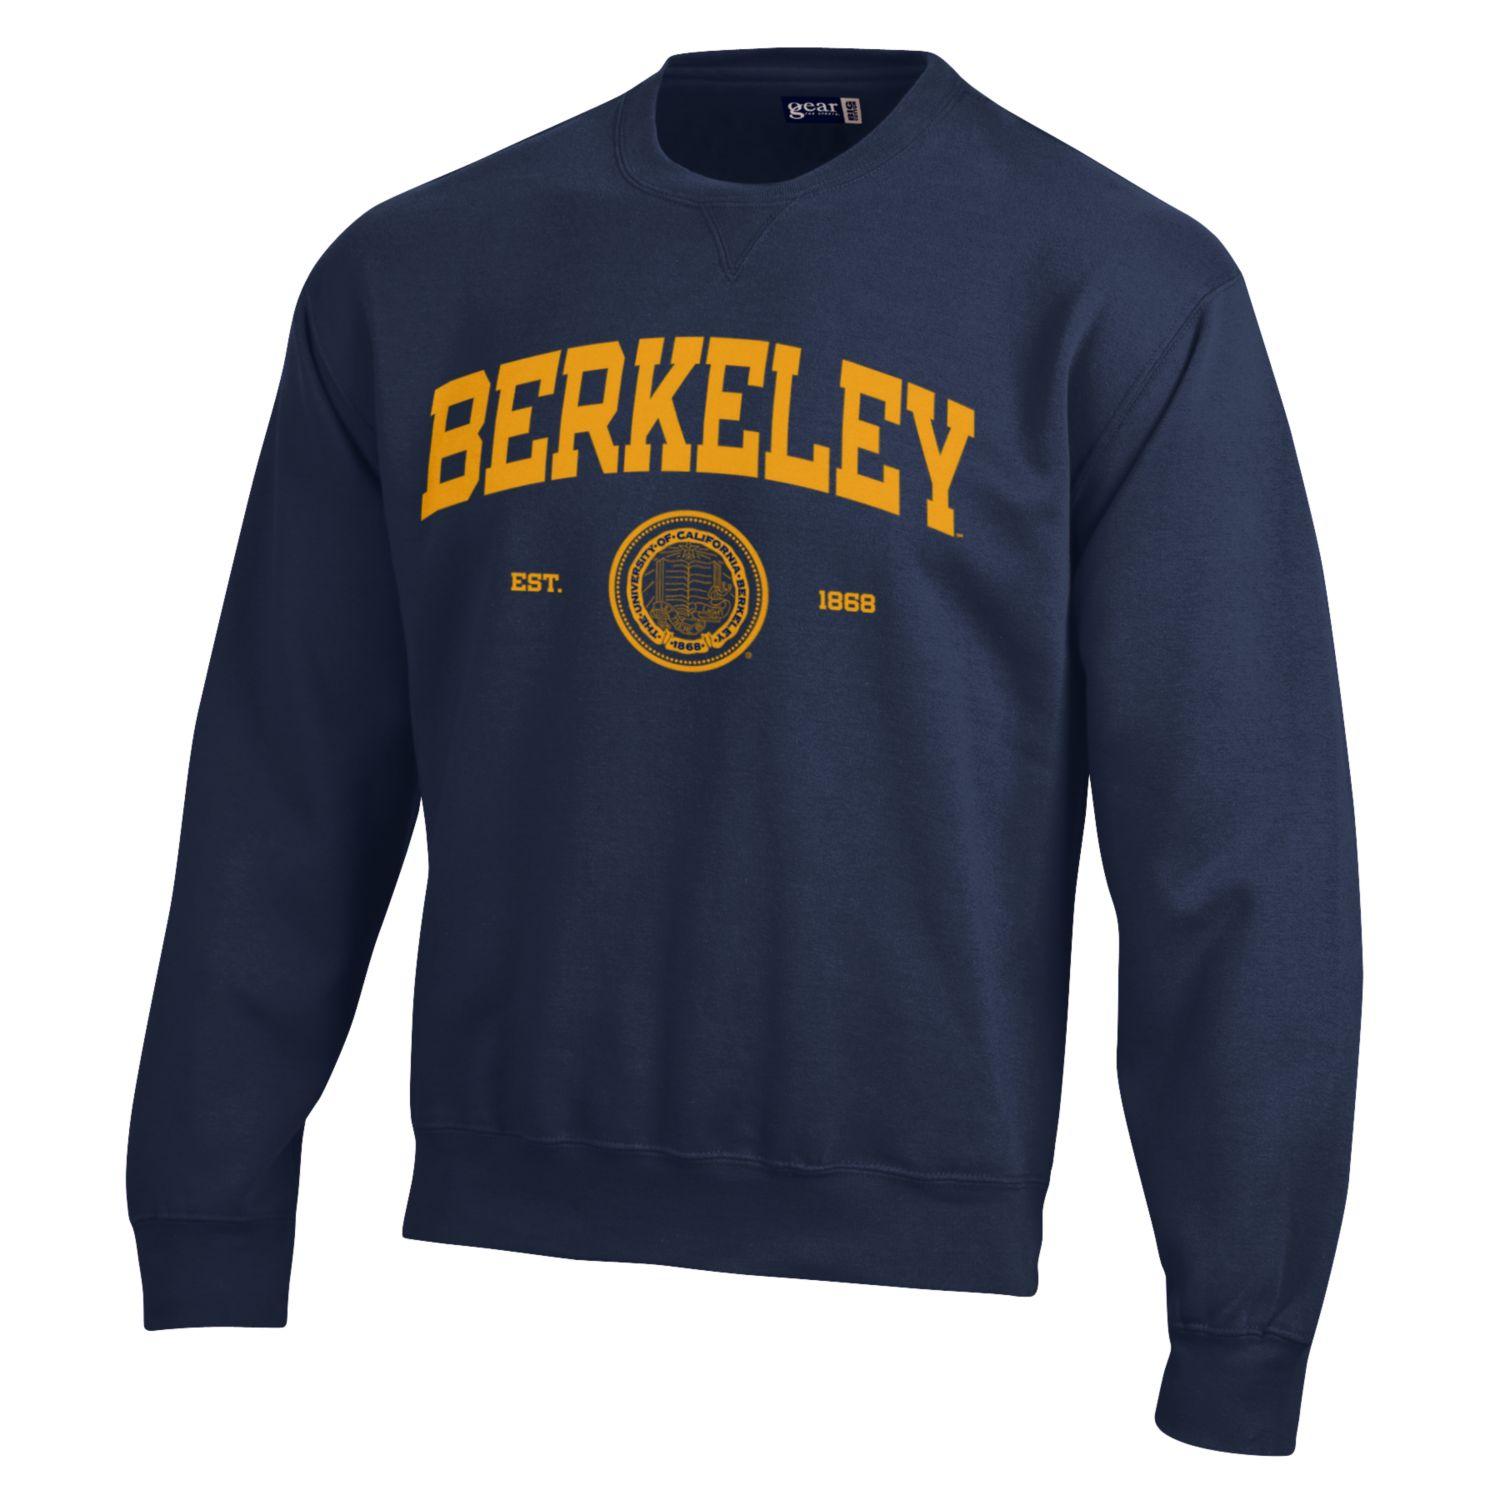 U.C. Berkeley arch & seal one ply applique cotton rich crew-neck sweatshirt-Navy-Shop College Wear